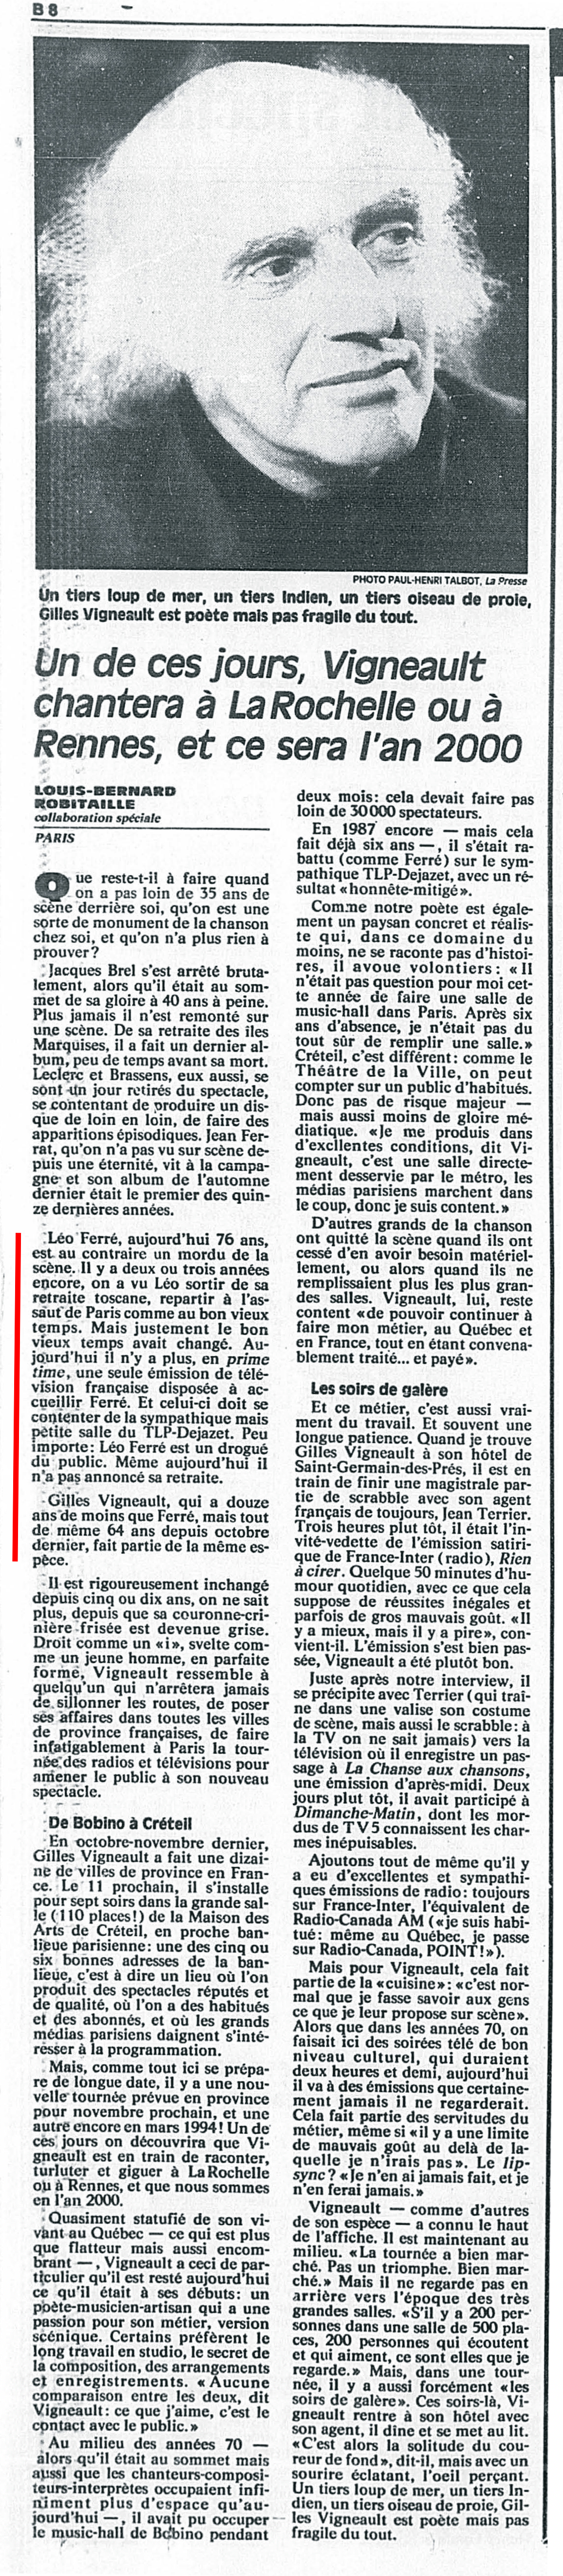 Léo Ferré - La Presse, 7 mars 1993, B. Livres